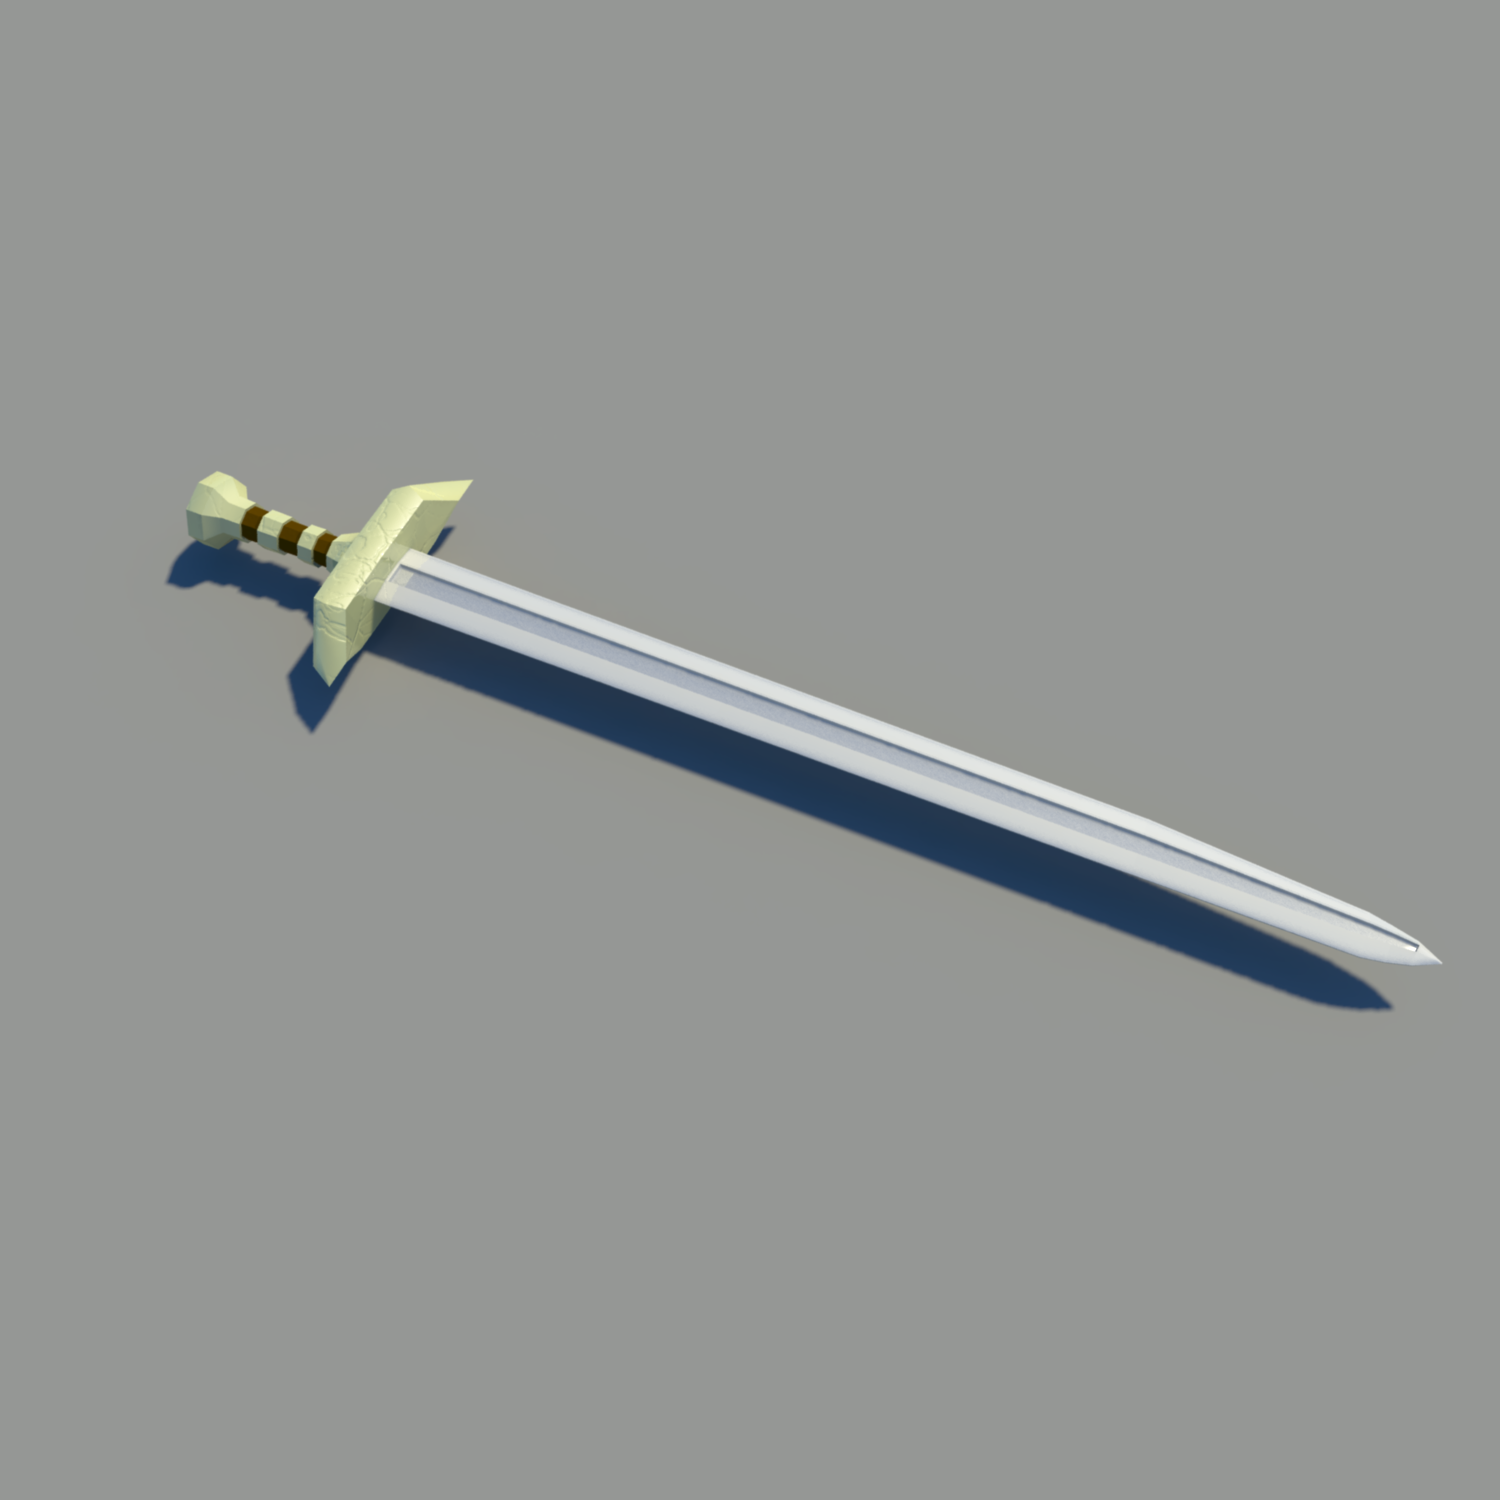 Medieval Stylelized sword 3D model